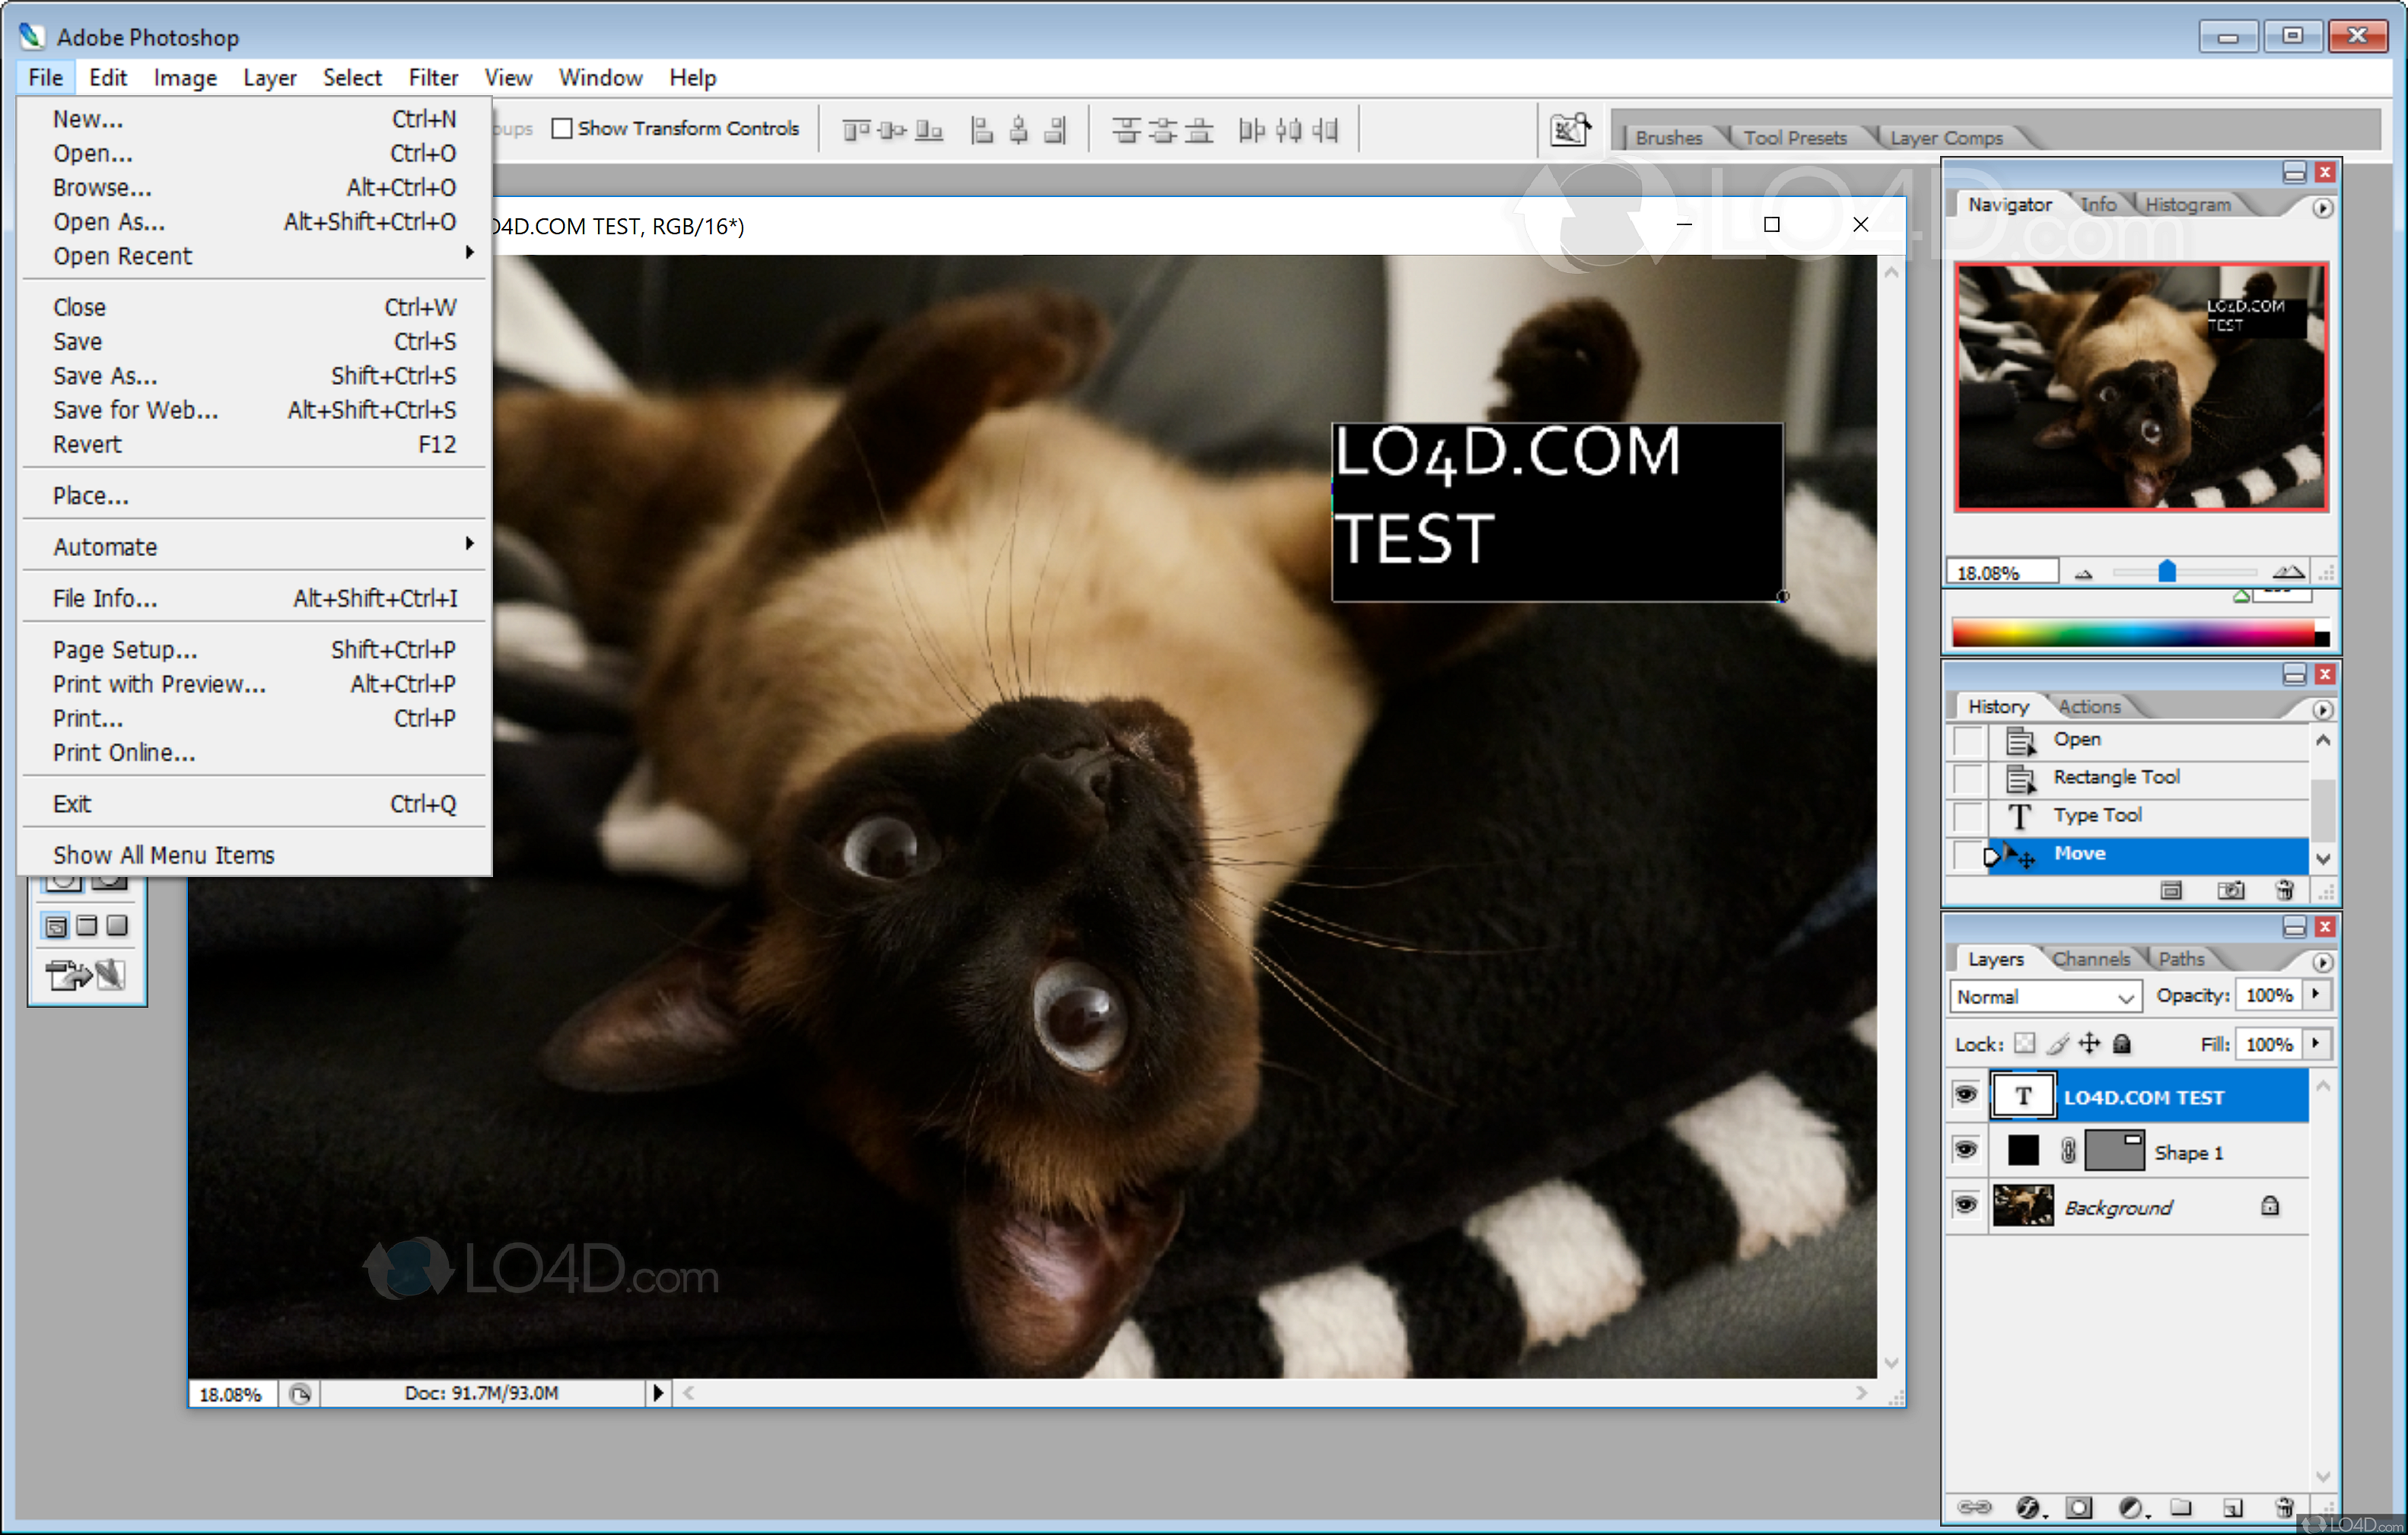 adobe photoshop cs2 9.0 free download full version with keygen